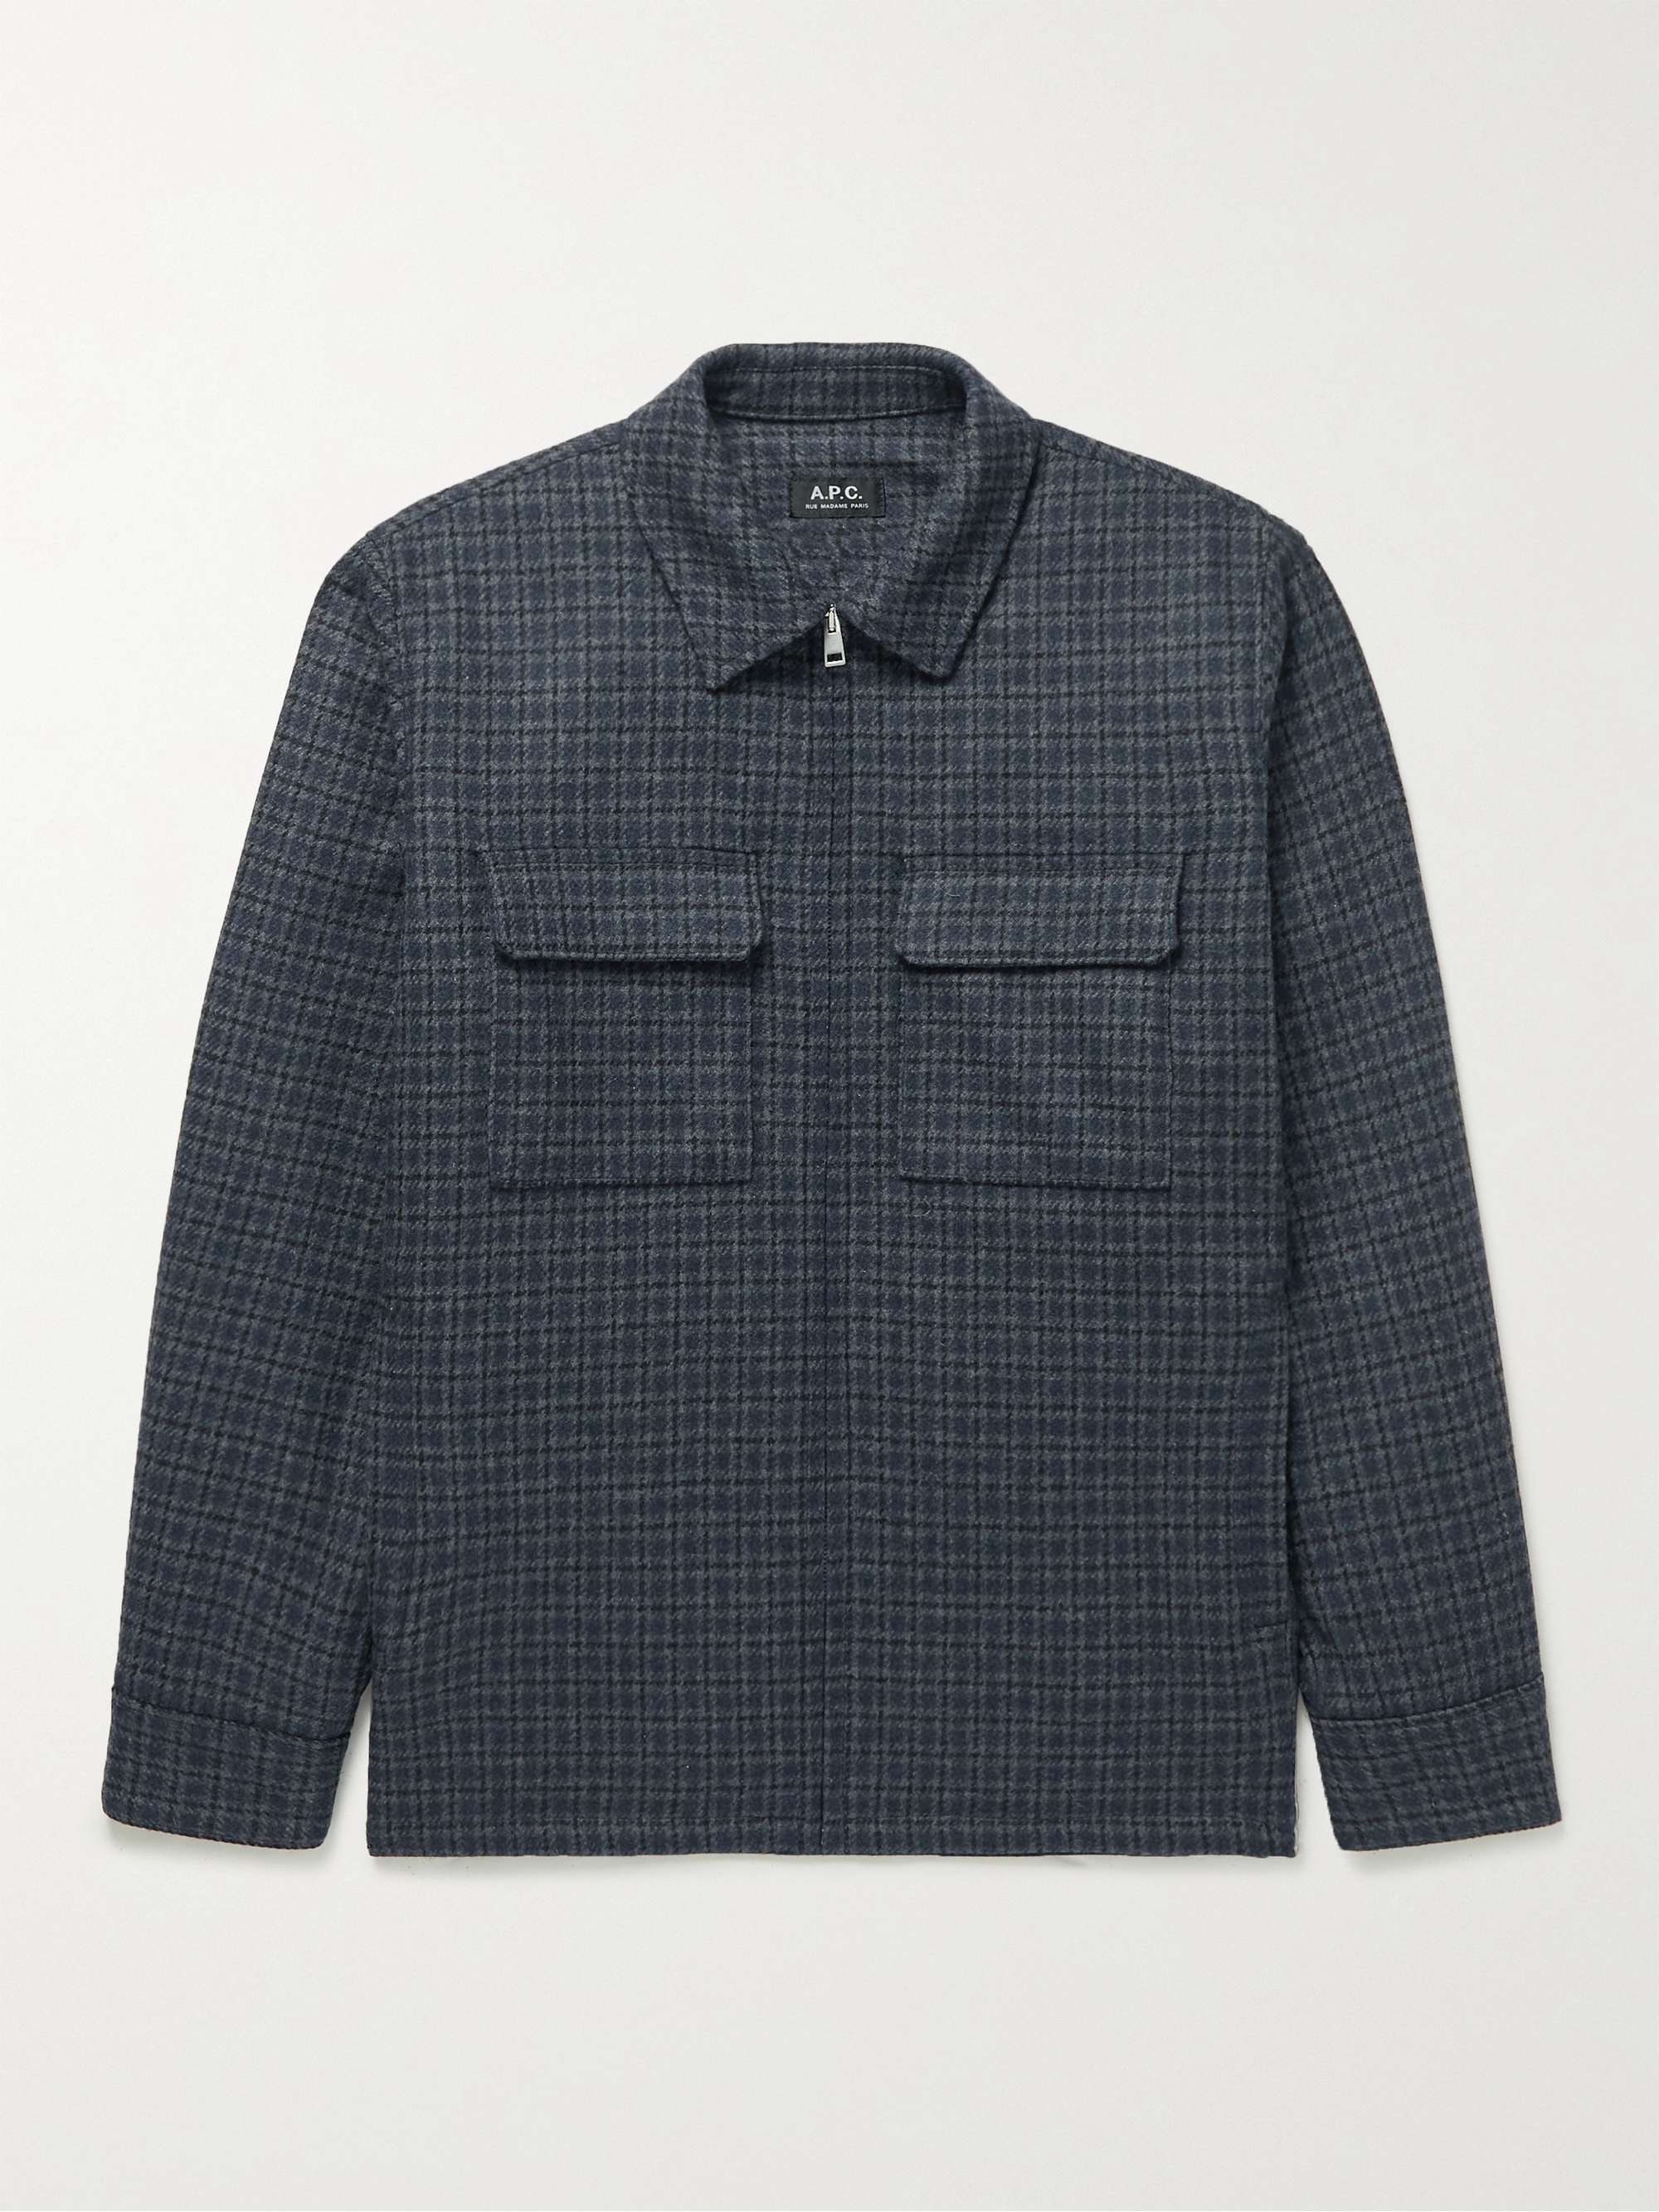 A.P.C. Thibault Checked Wool-Blend Shirt Jacket for Men | MR PORTER